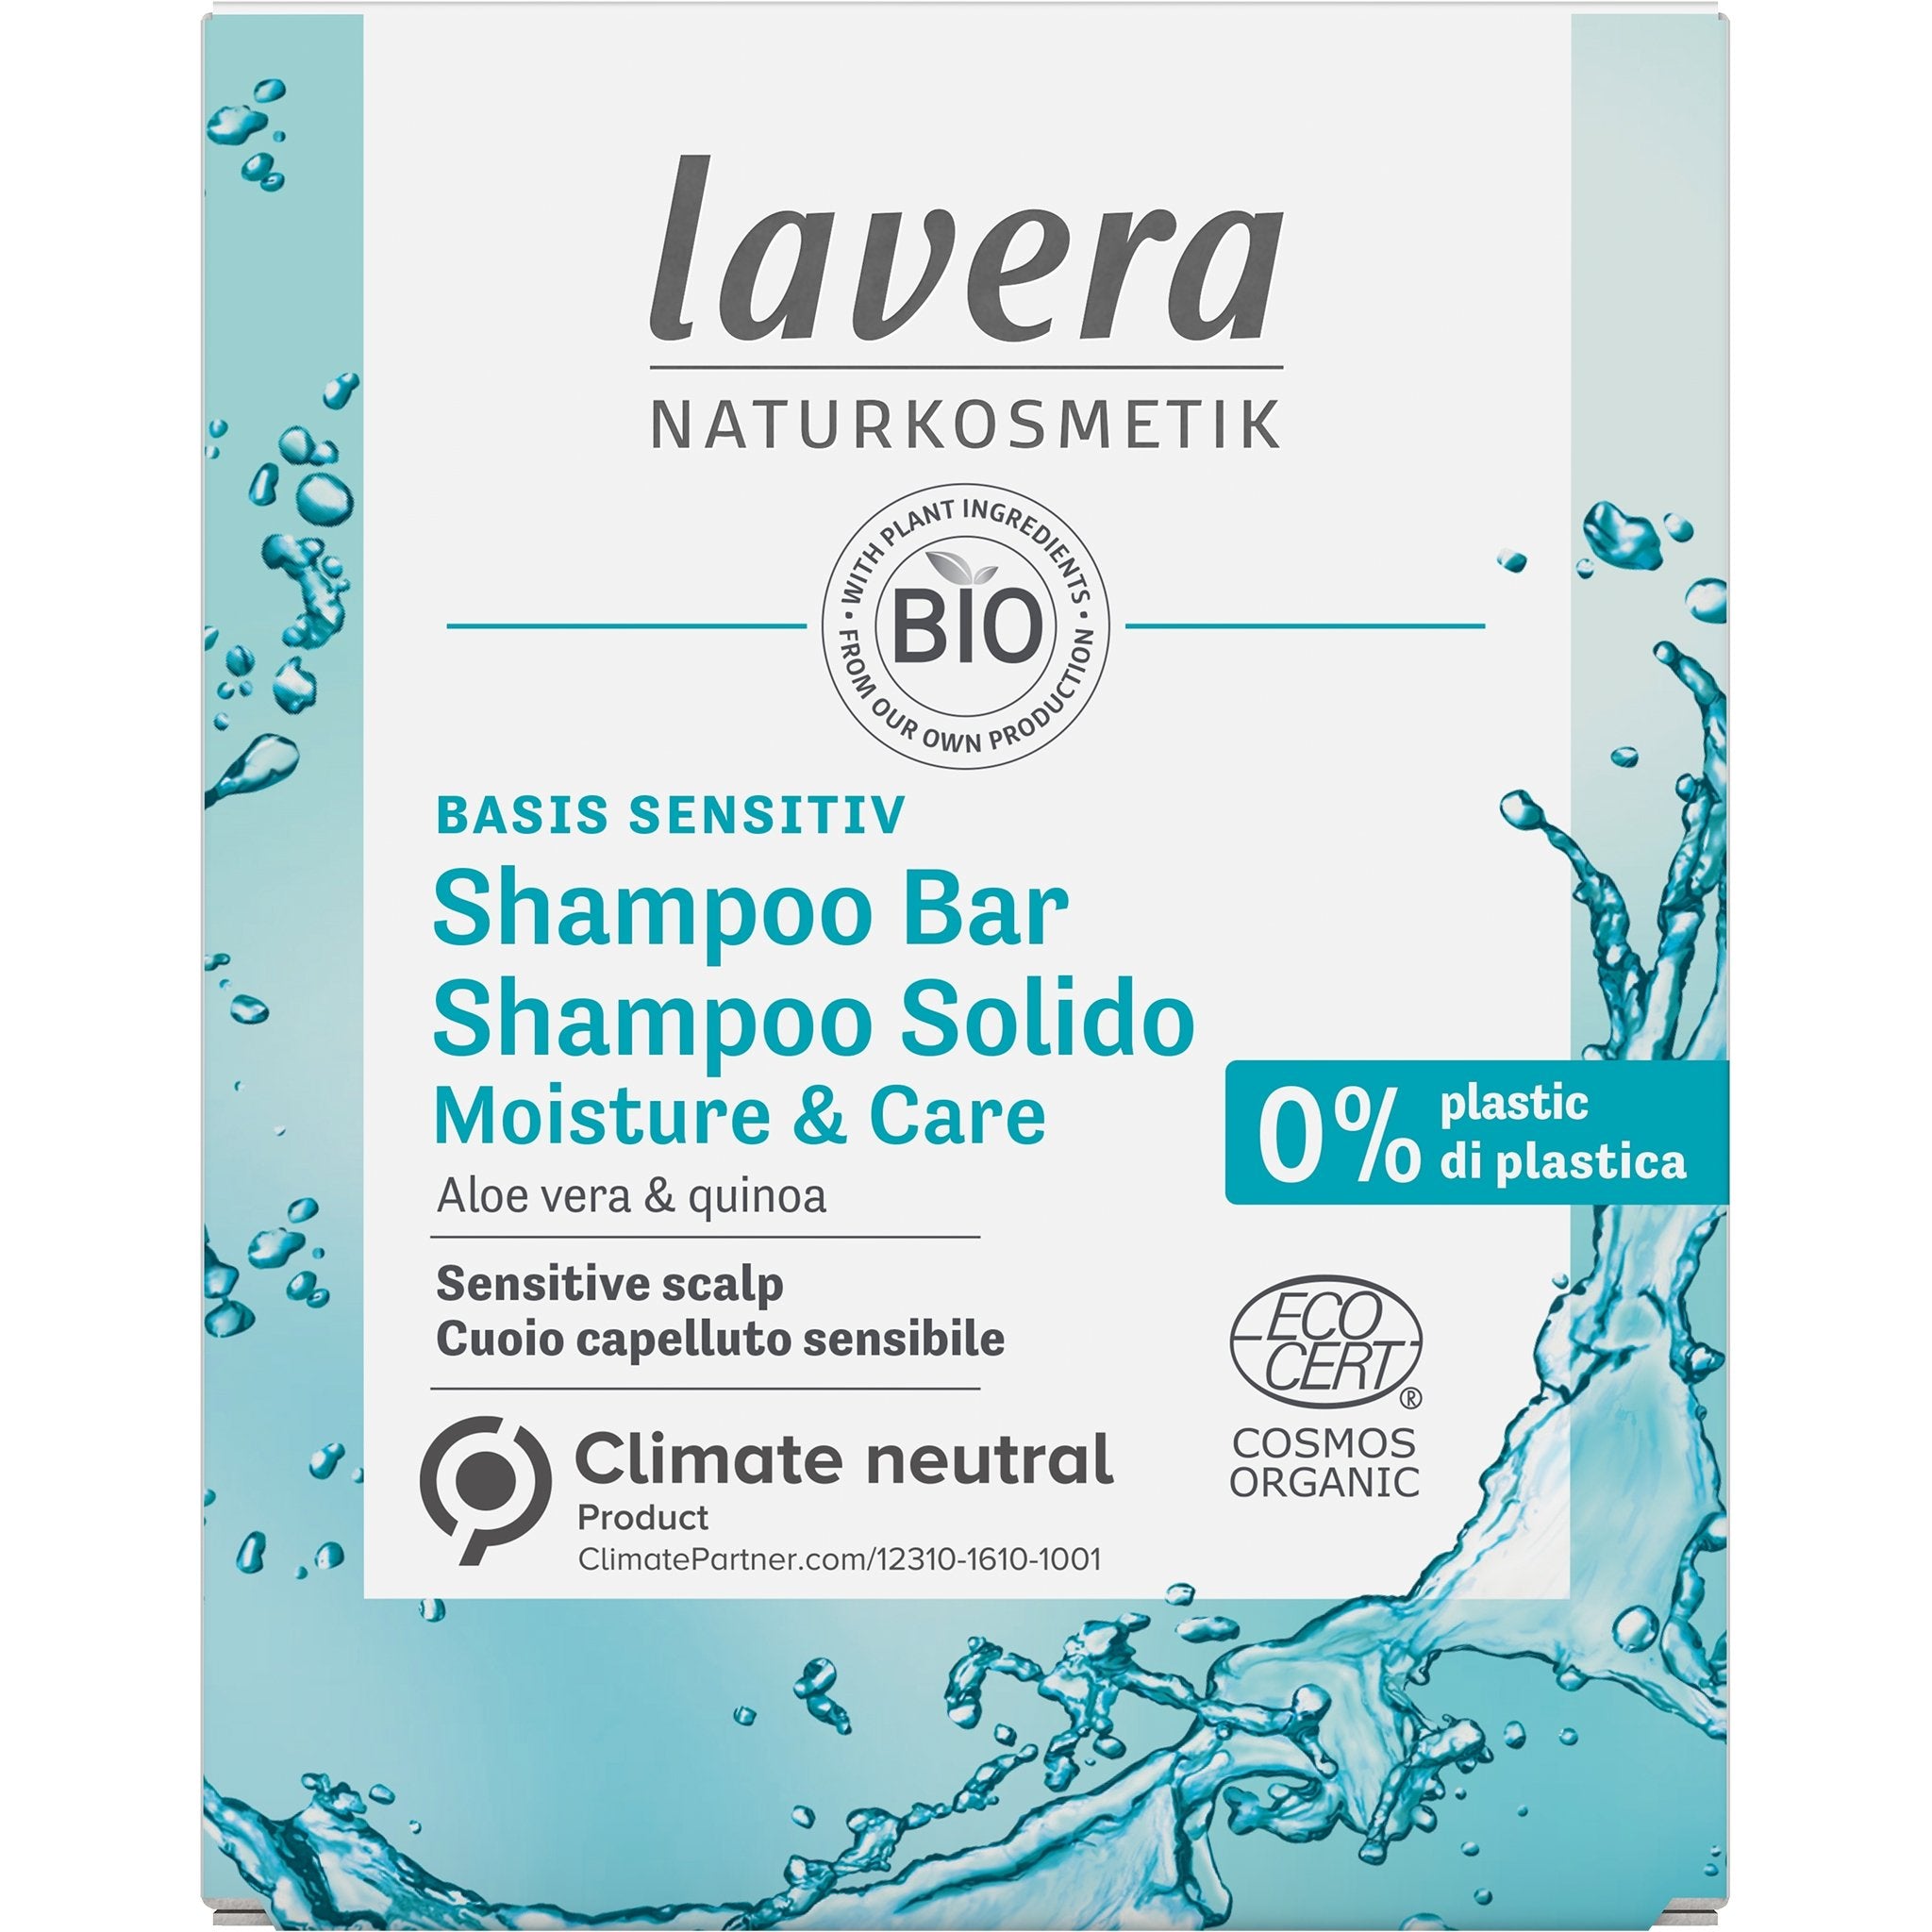 BASIS SENSITIV - Shampoo Bar - mypure.co.uk